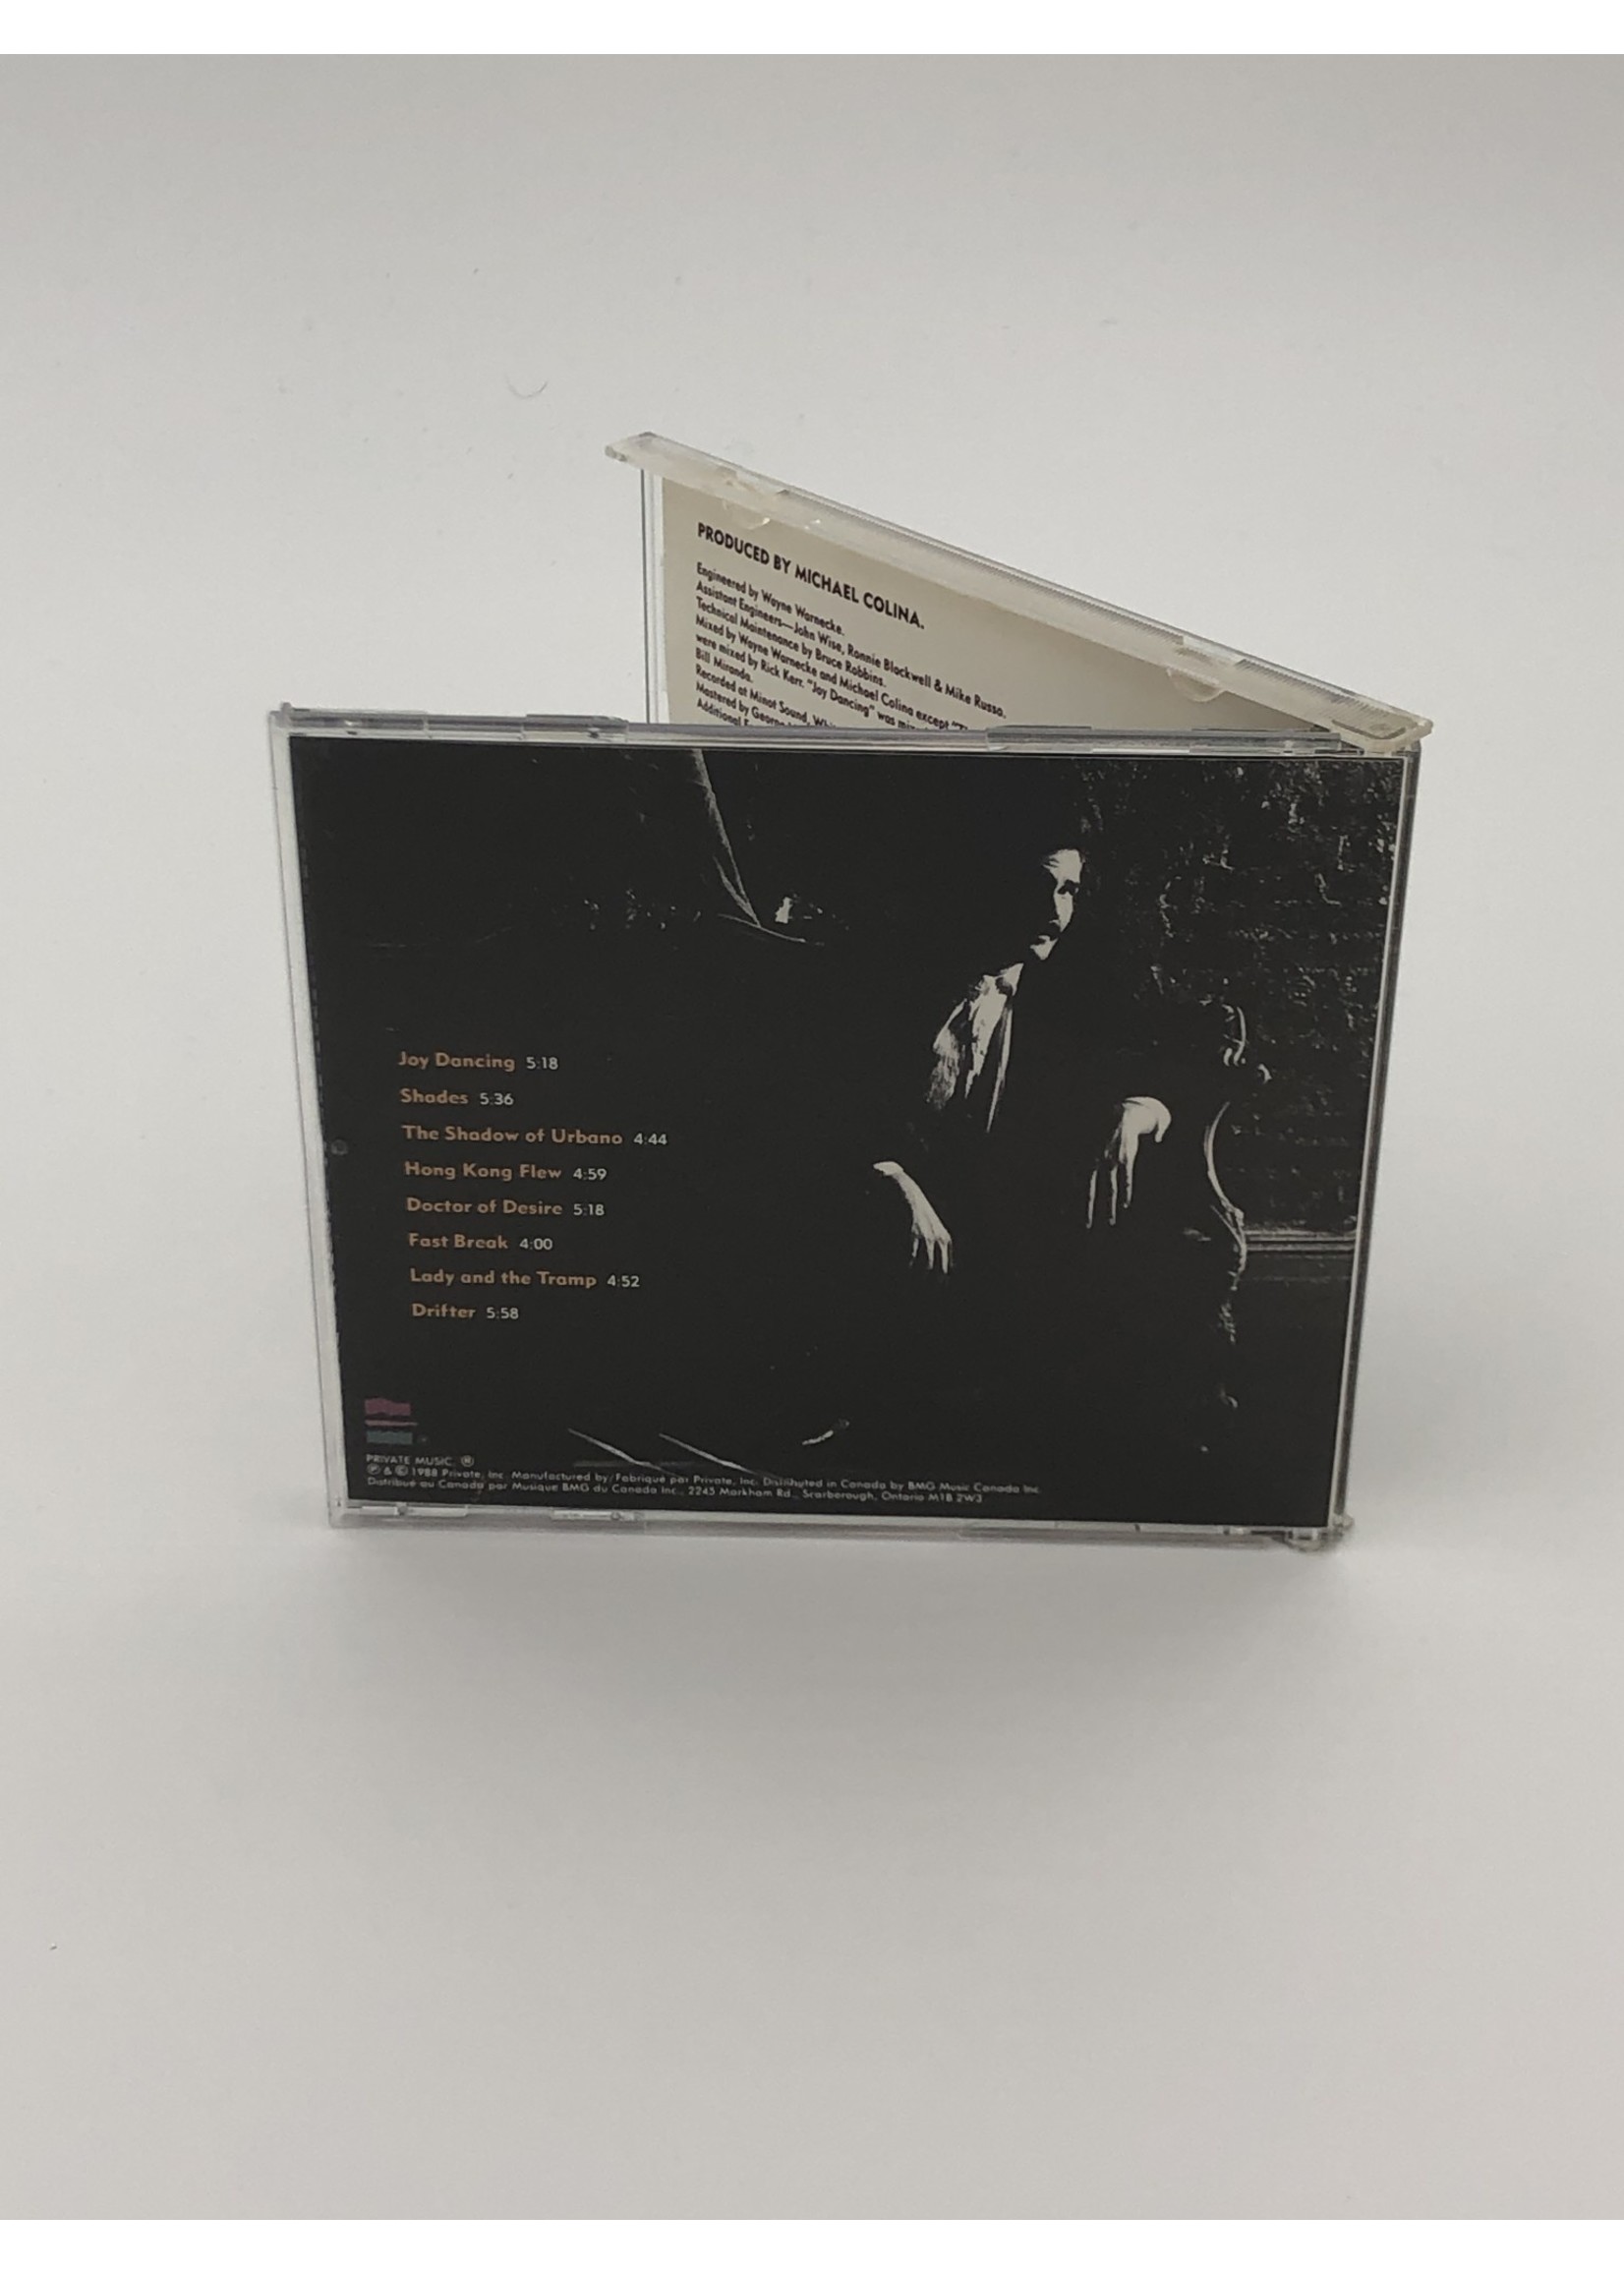 CD Michael Colina: Shadow of Urbano CD